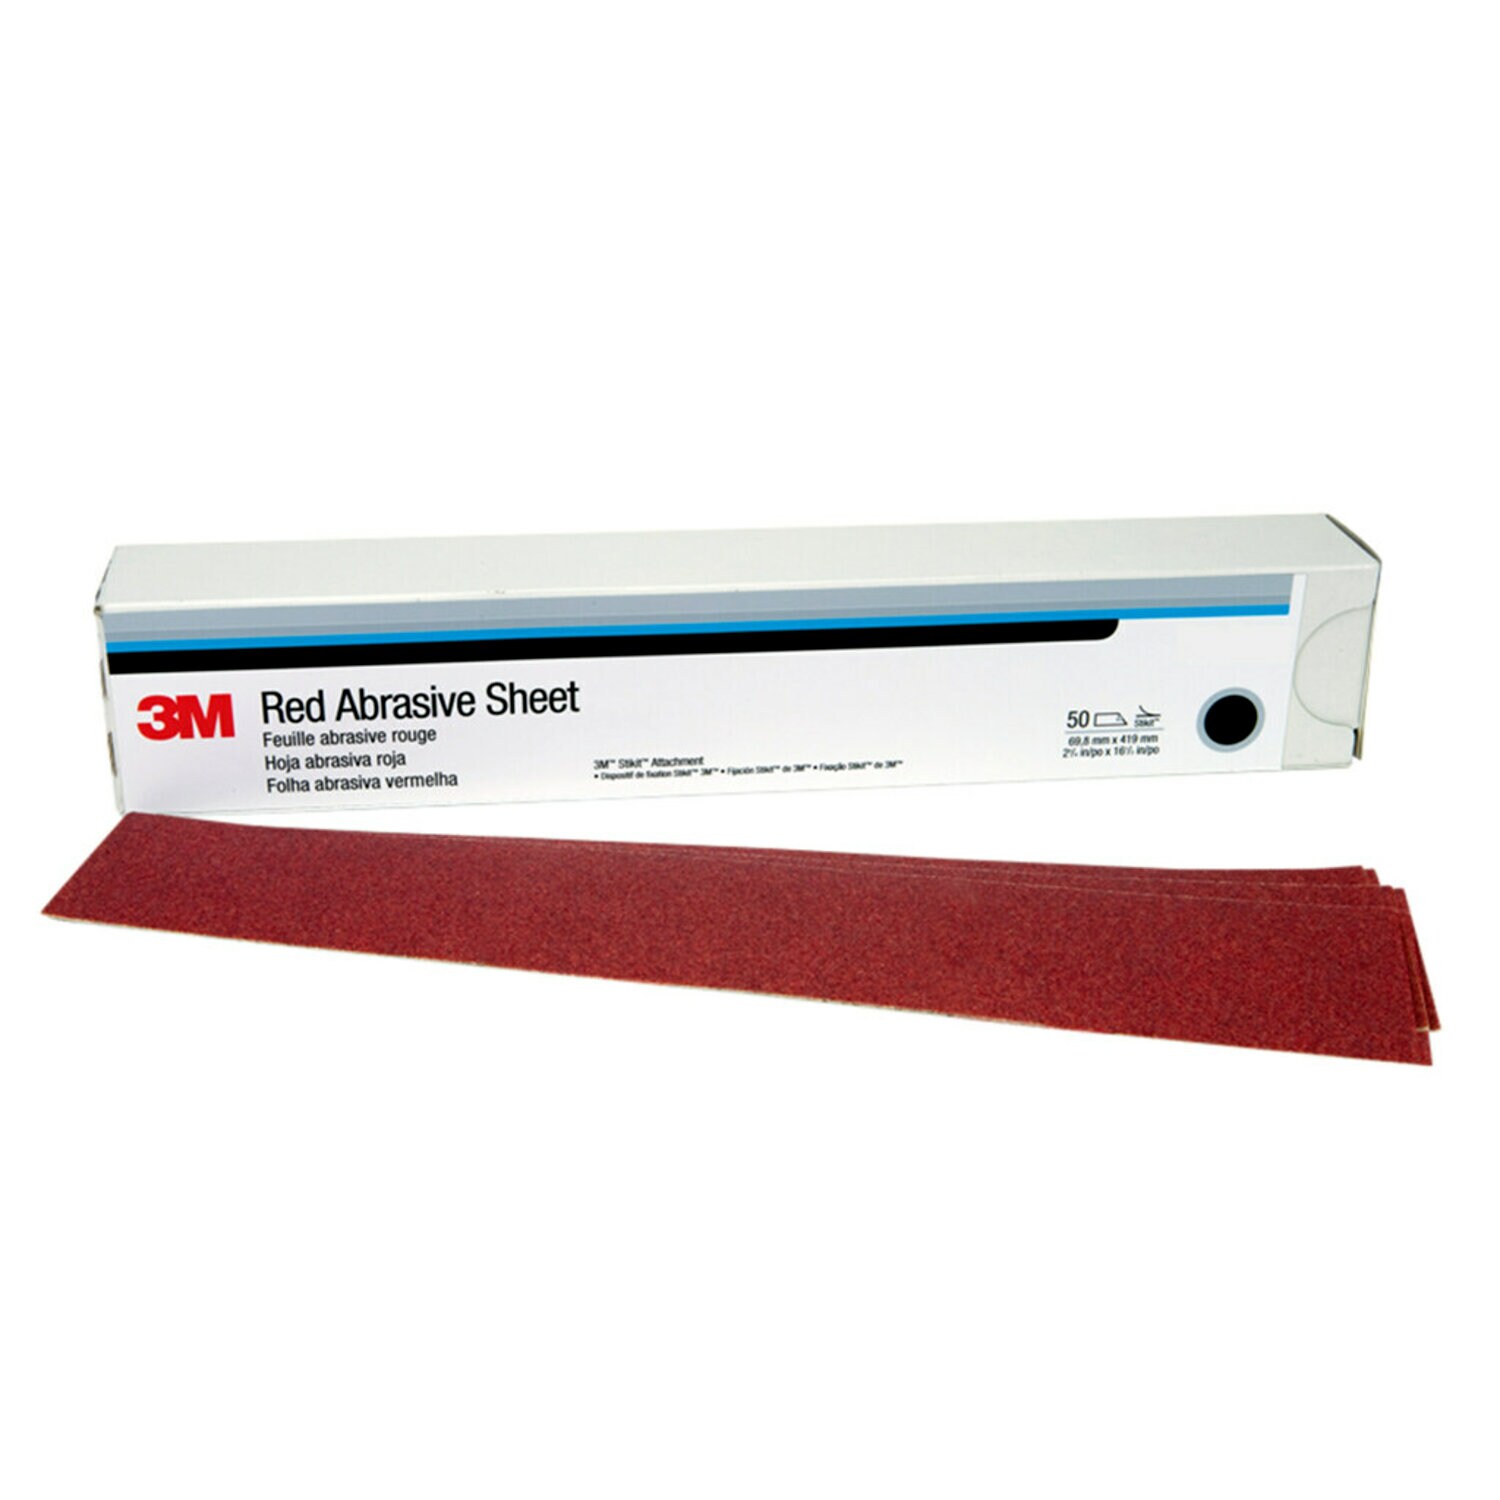 GRIP SHEET 45 x 37 Anti-Slip Pallet Paper Sheets - 4000/Pallet